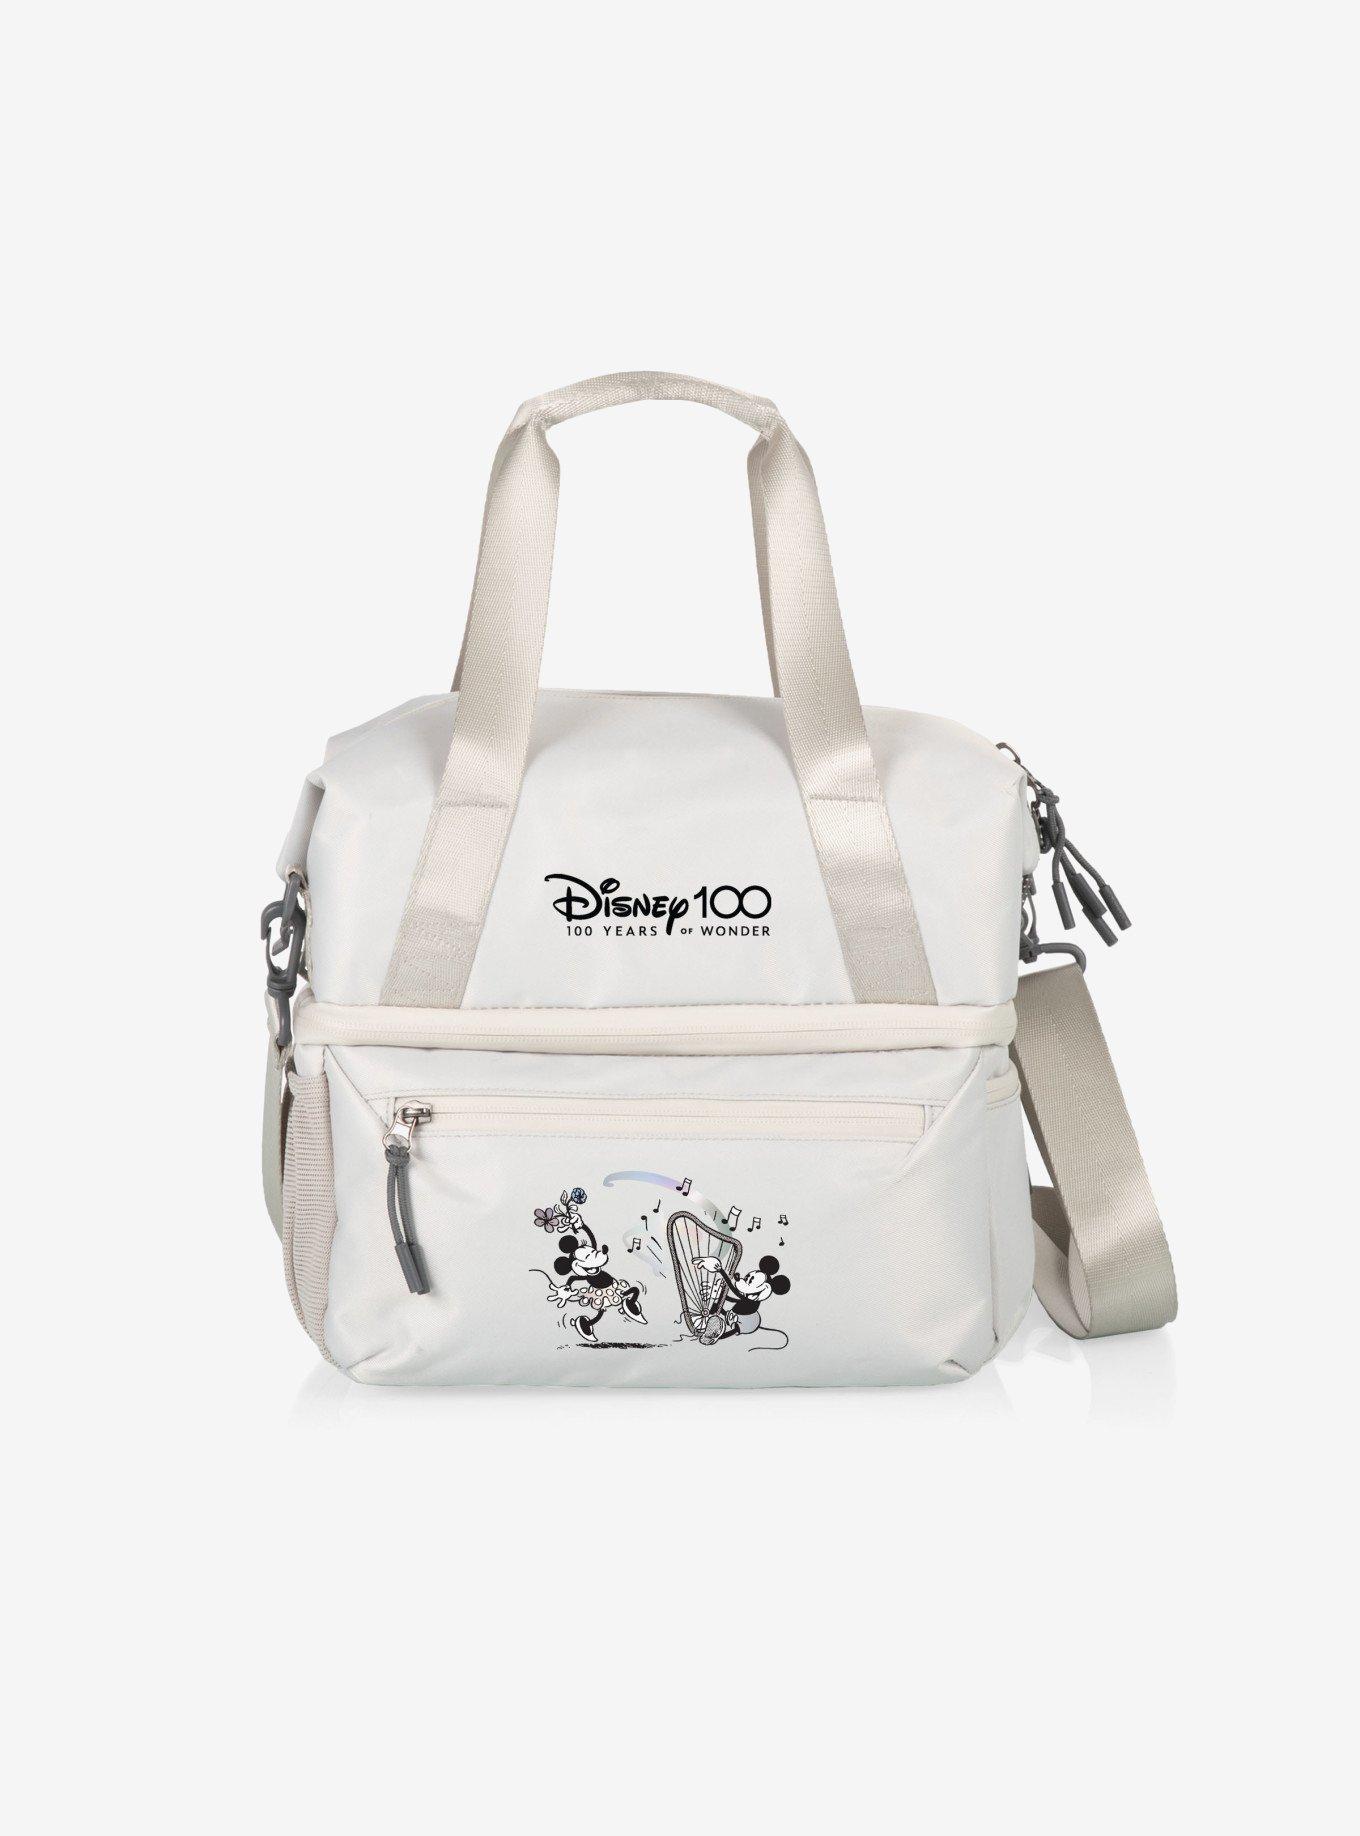 Disney100 Mickey Mouse Tarana Lunch Cooler Bag